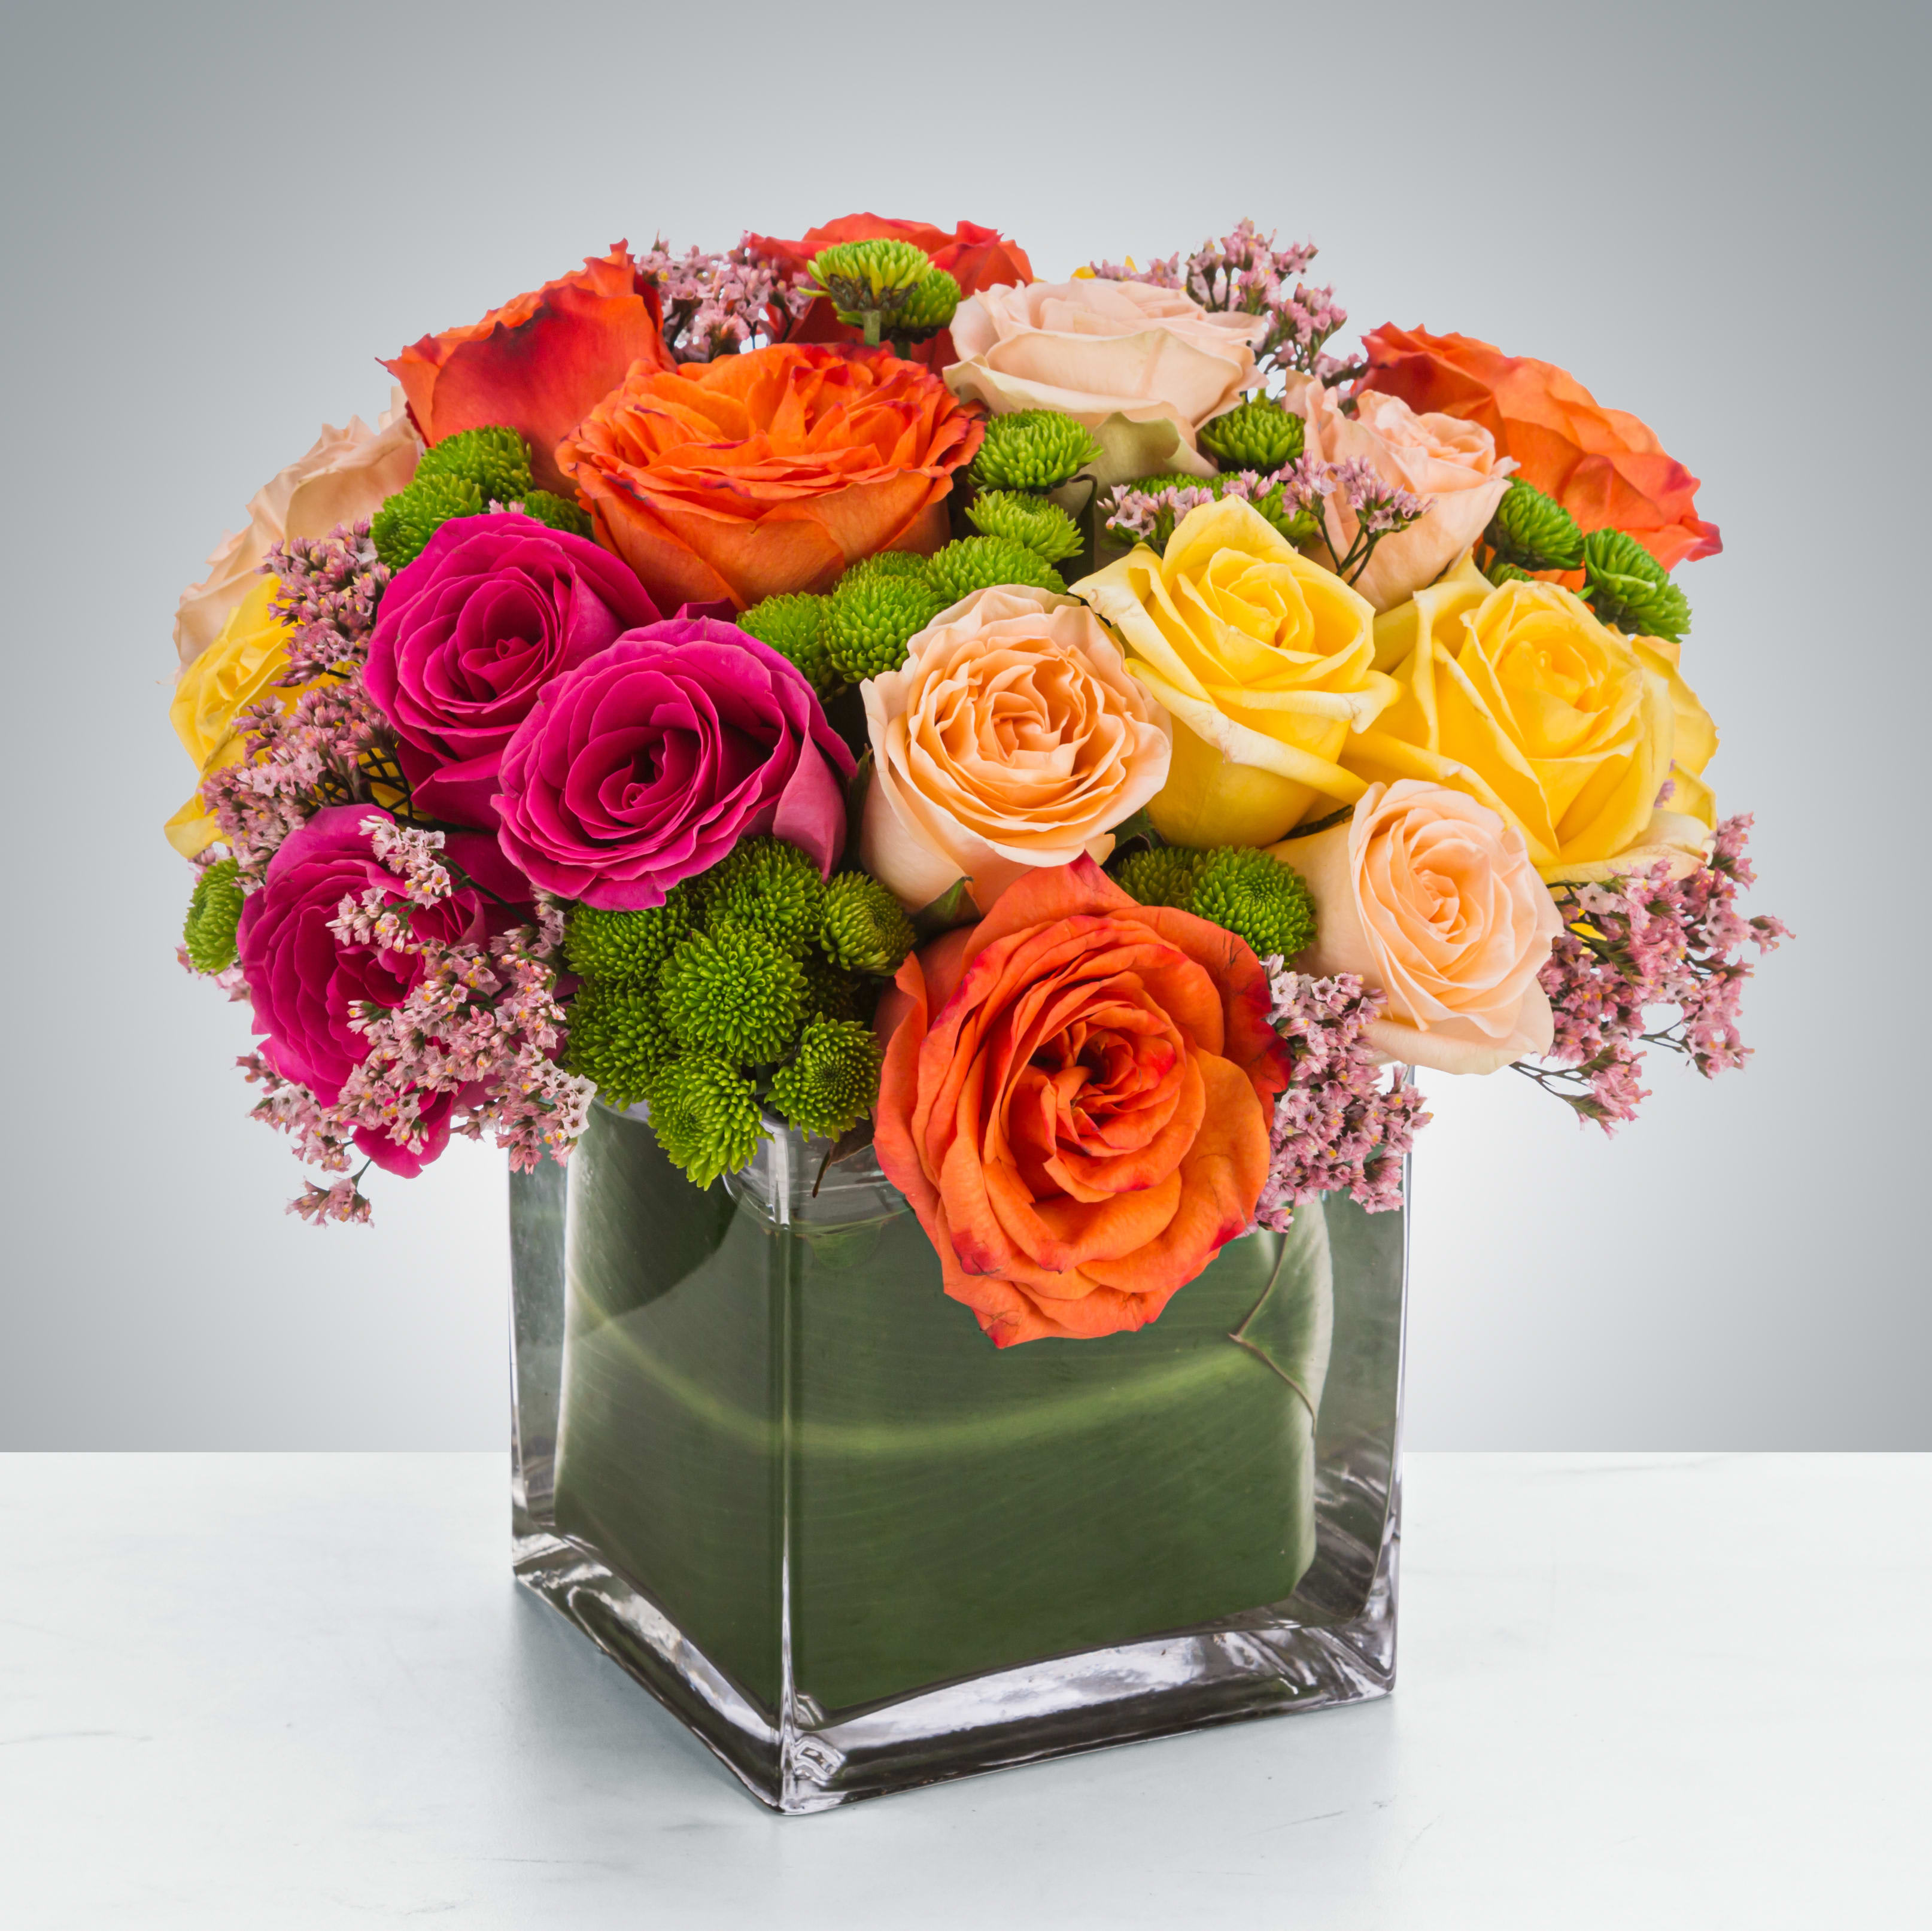 Glitter Kaleidoscope Roses - Sparkling Fresh Tie Dye Blooms